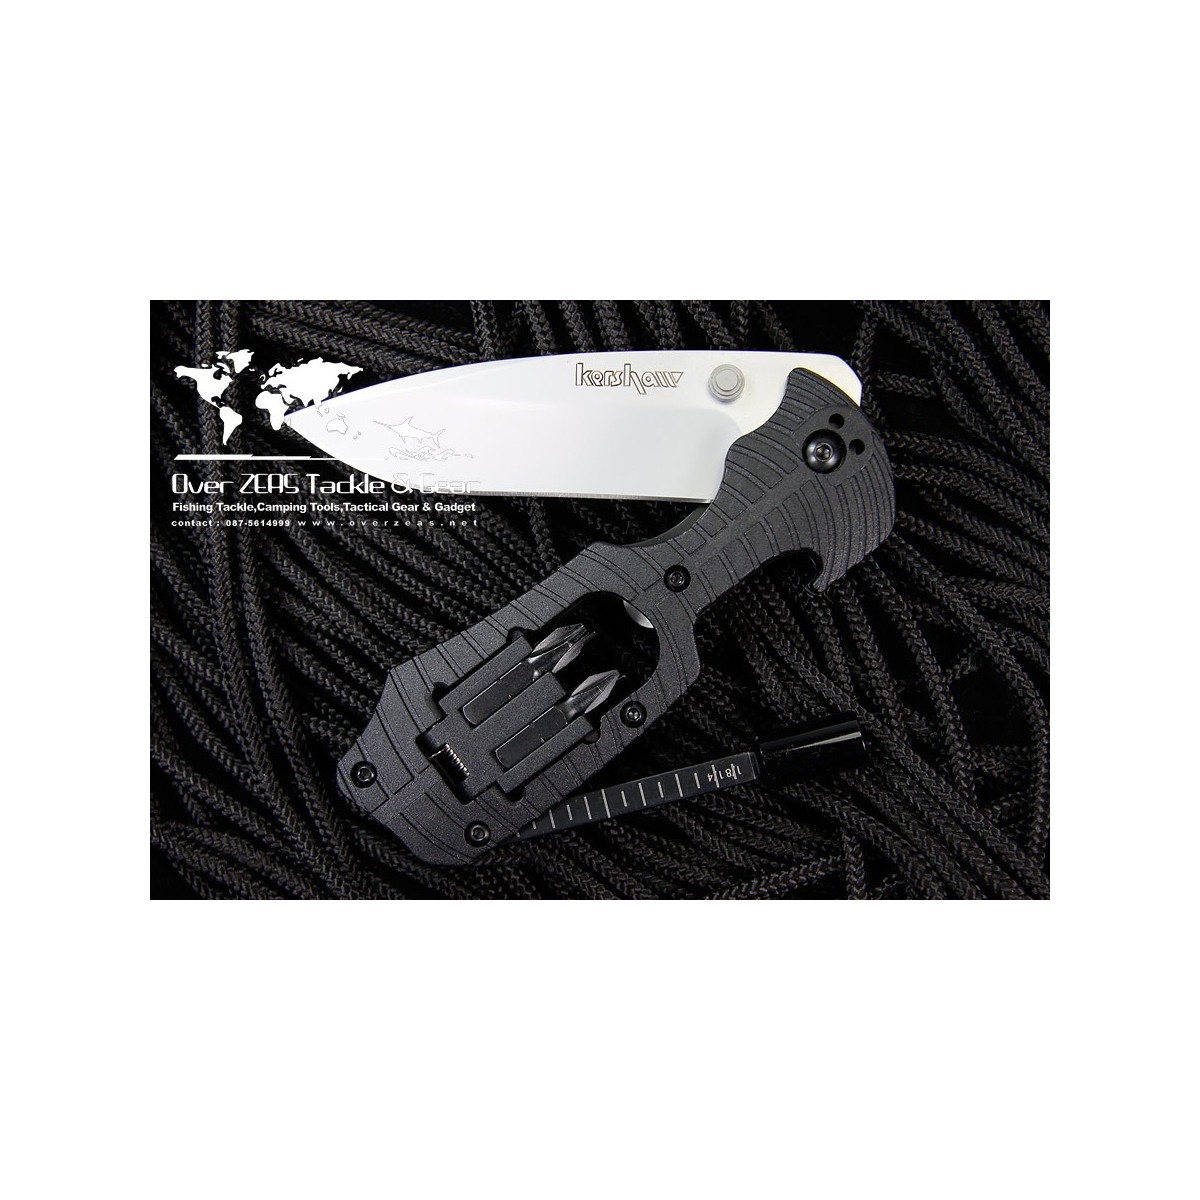 Kershaw Select Fire 3-3/8" Plain Edge Blade Multi-Tool Knife